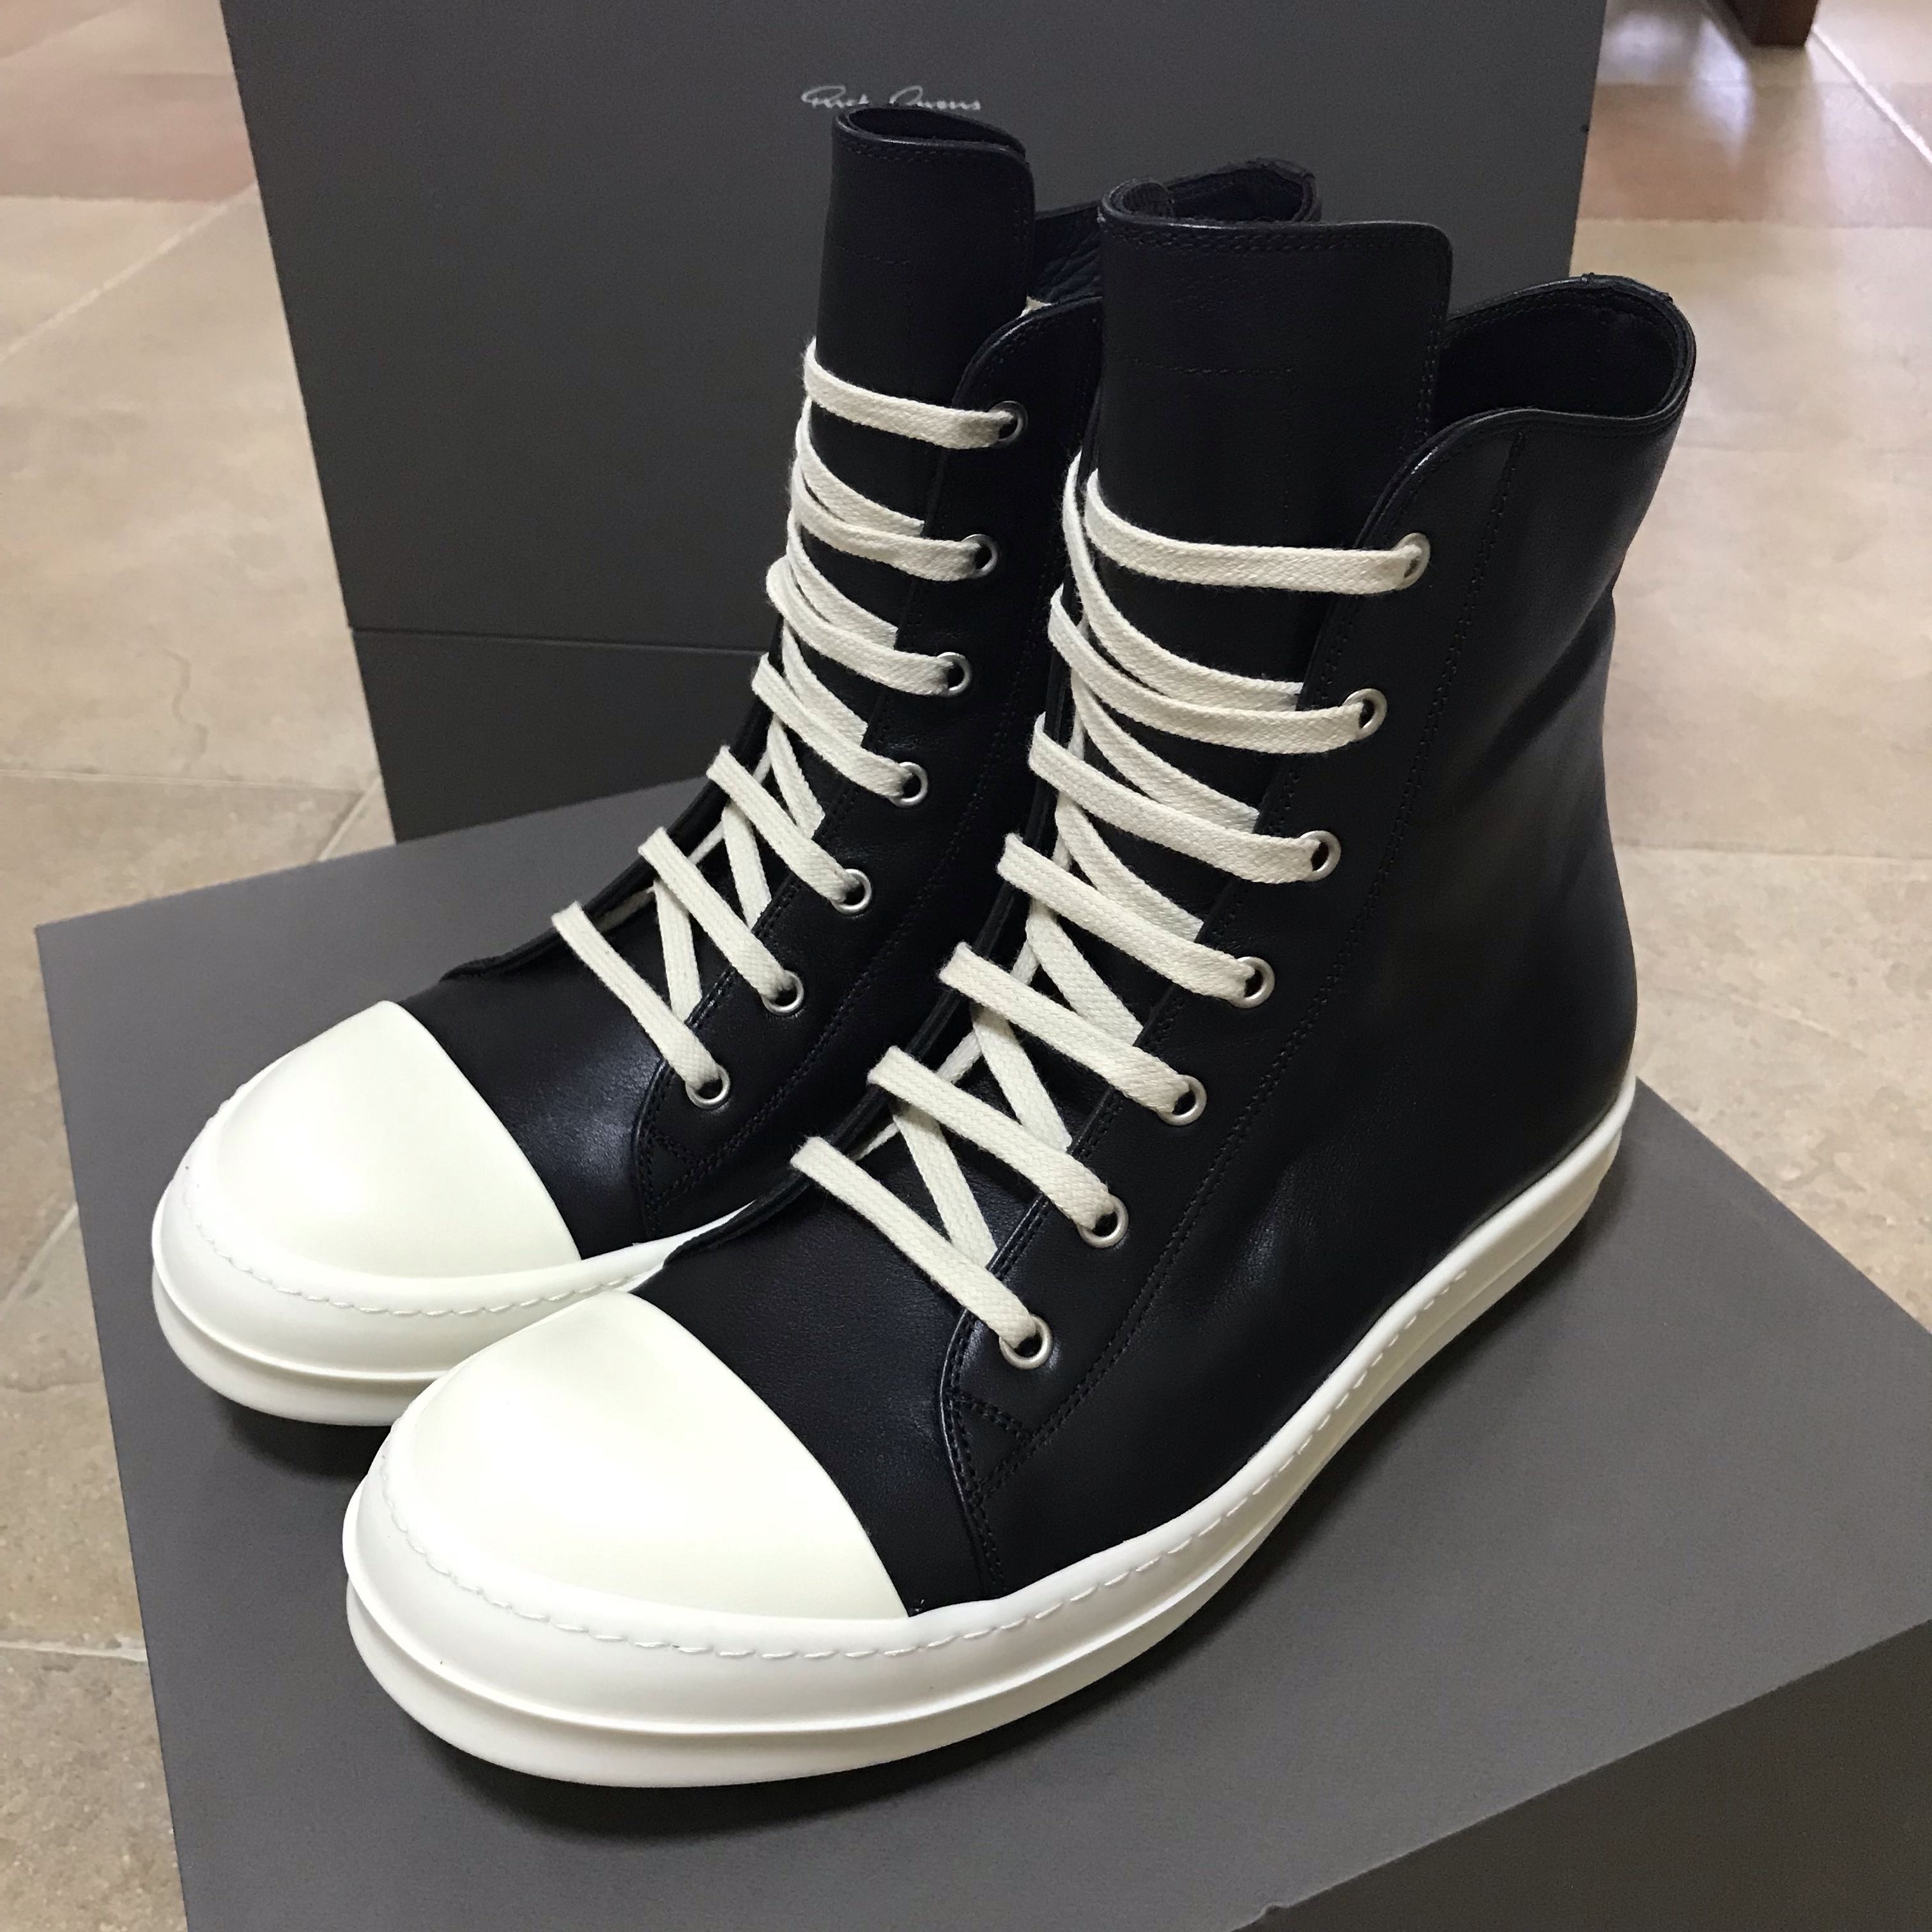 Full Leather Rick Owens Ramones, Men's Fashion, Footwear, Dress ...